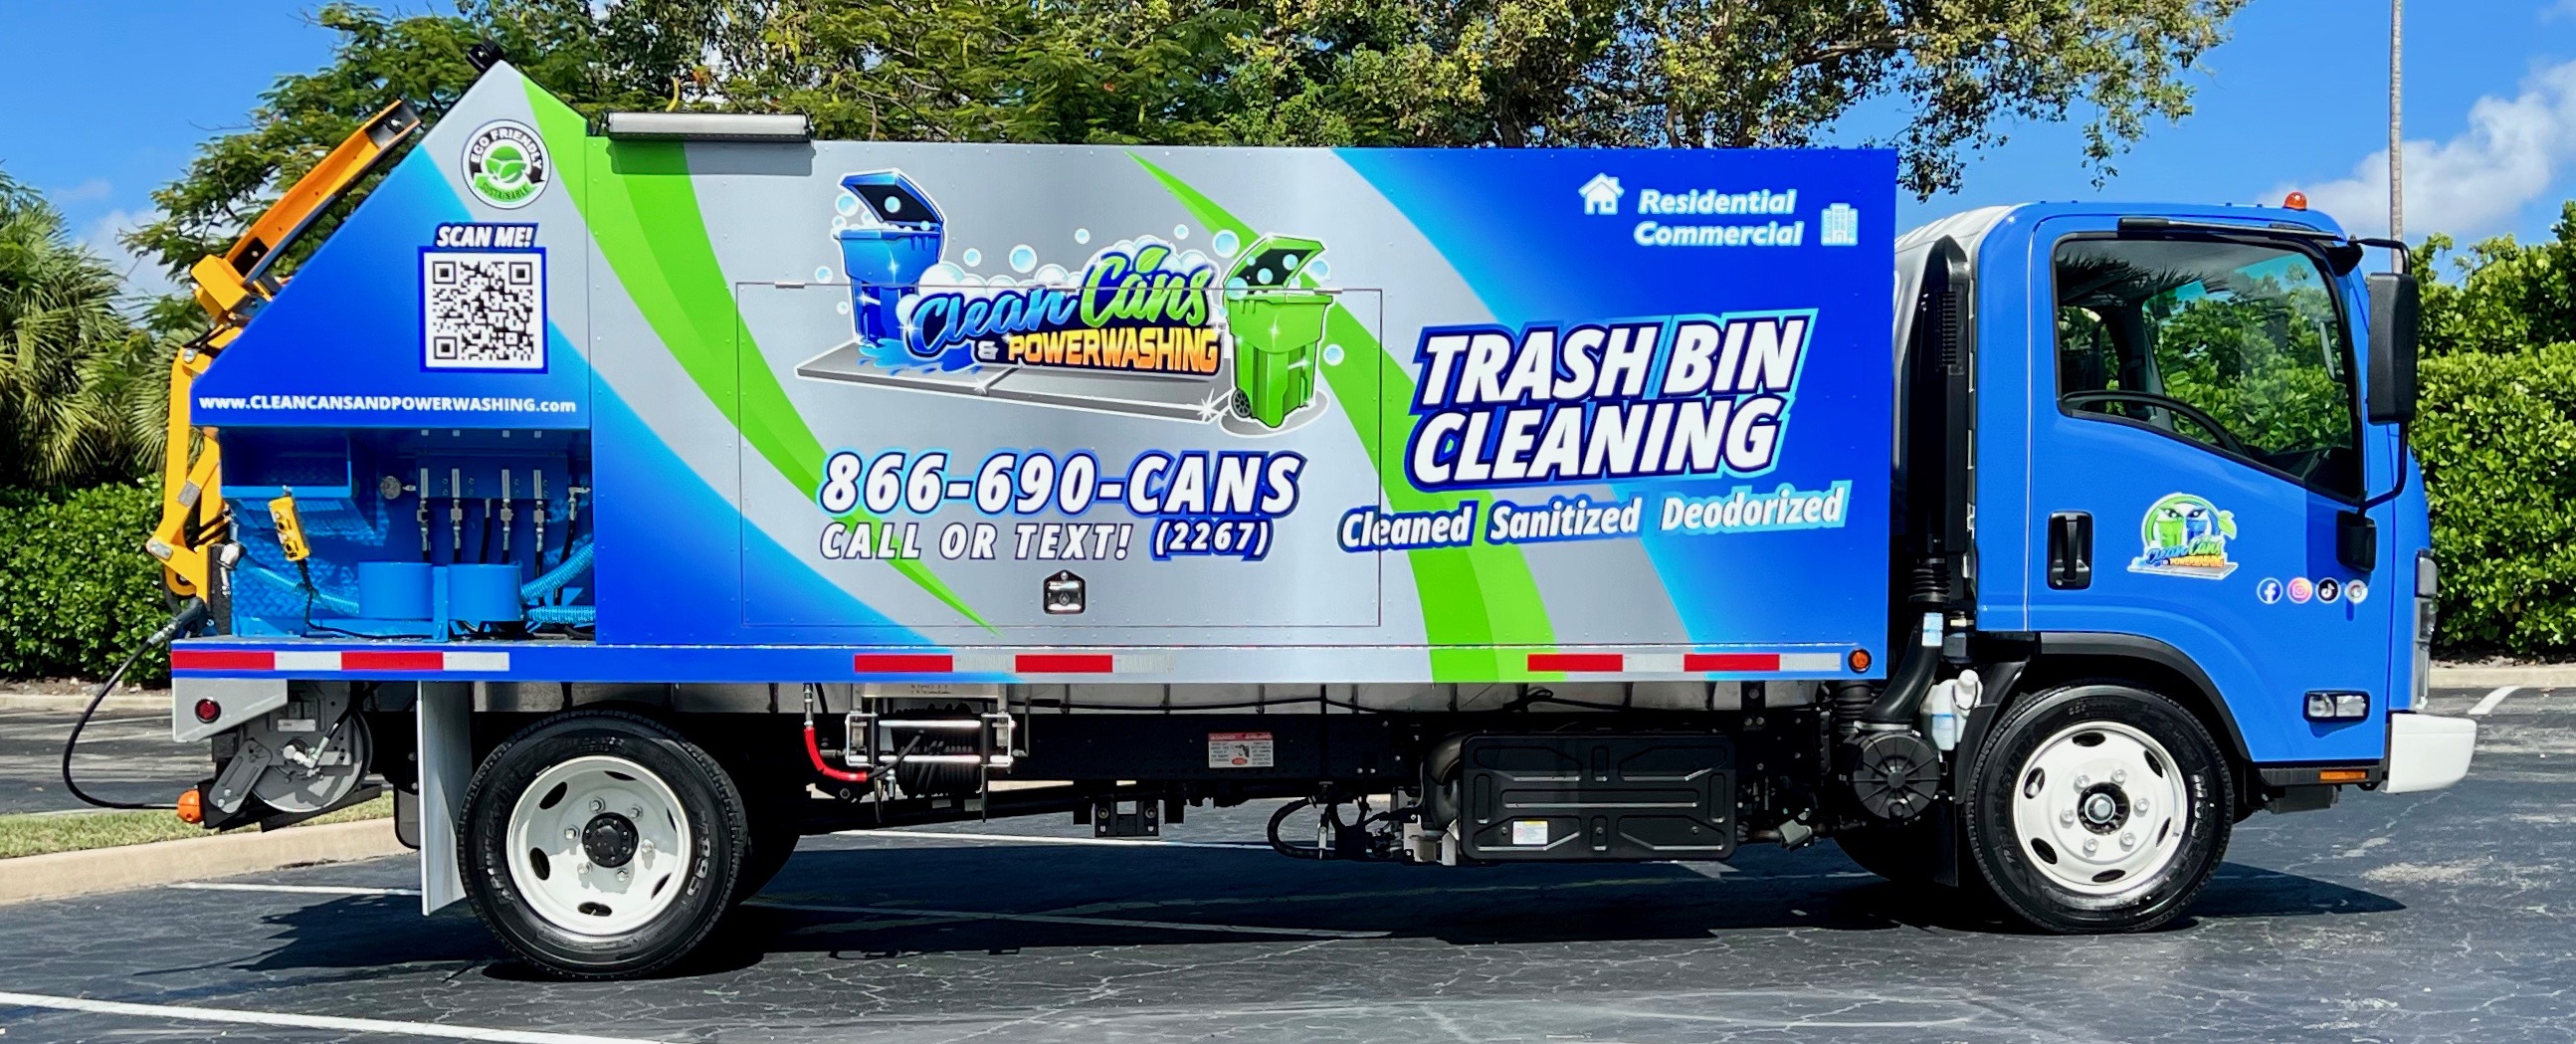 T0124_SB4 PTO_Trash_Bin_Cleaning_Truck